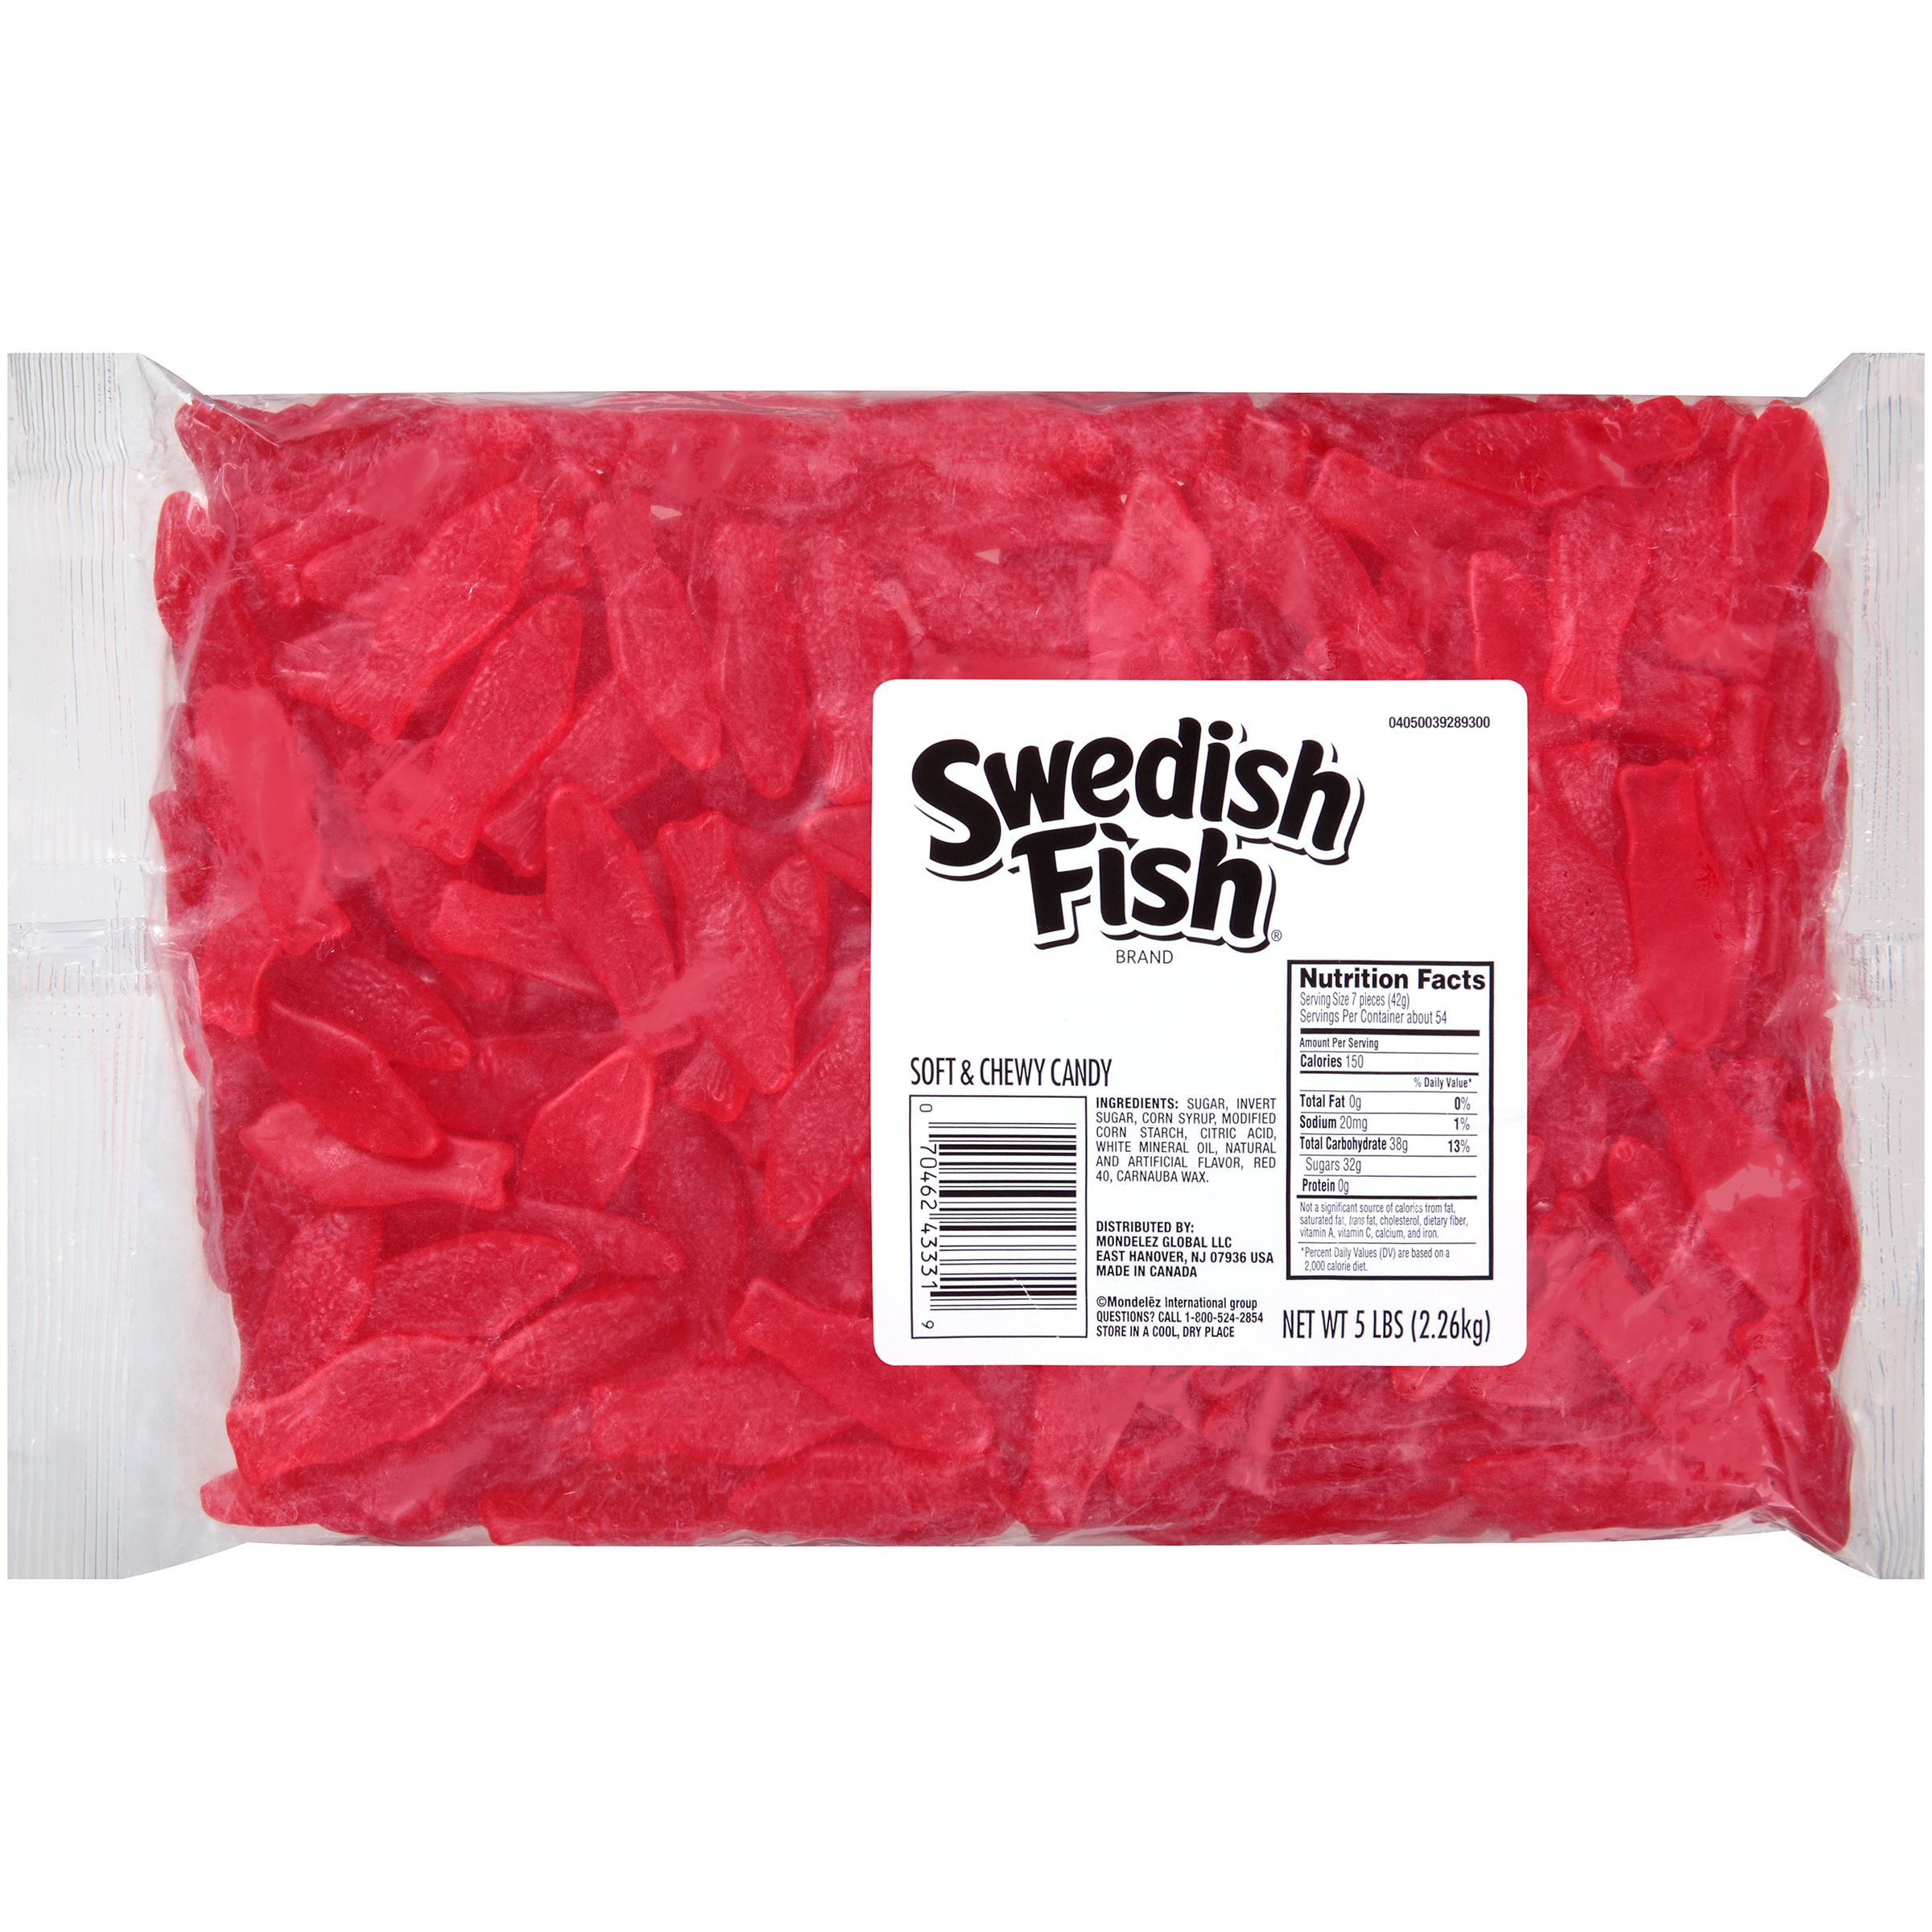 SWEDISH FISH Soft & Chewy Candy, 5 lb Bag